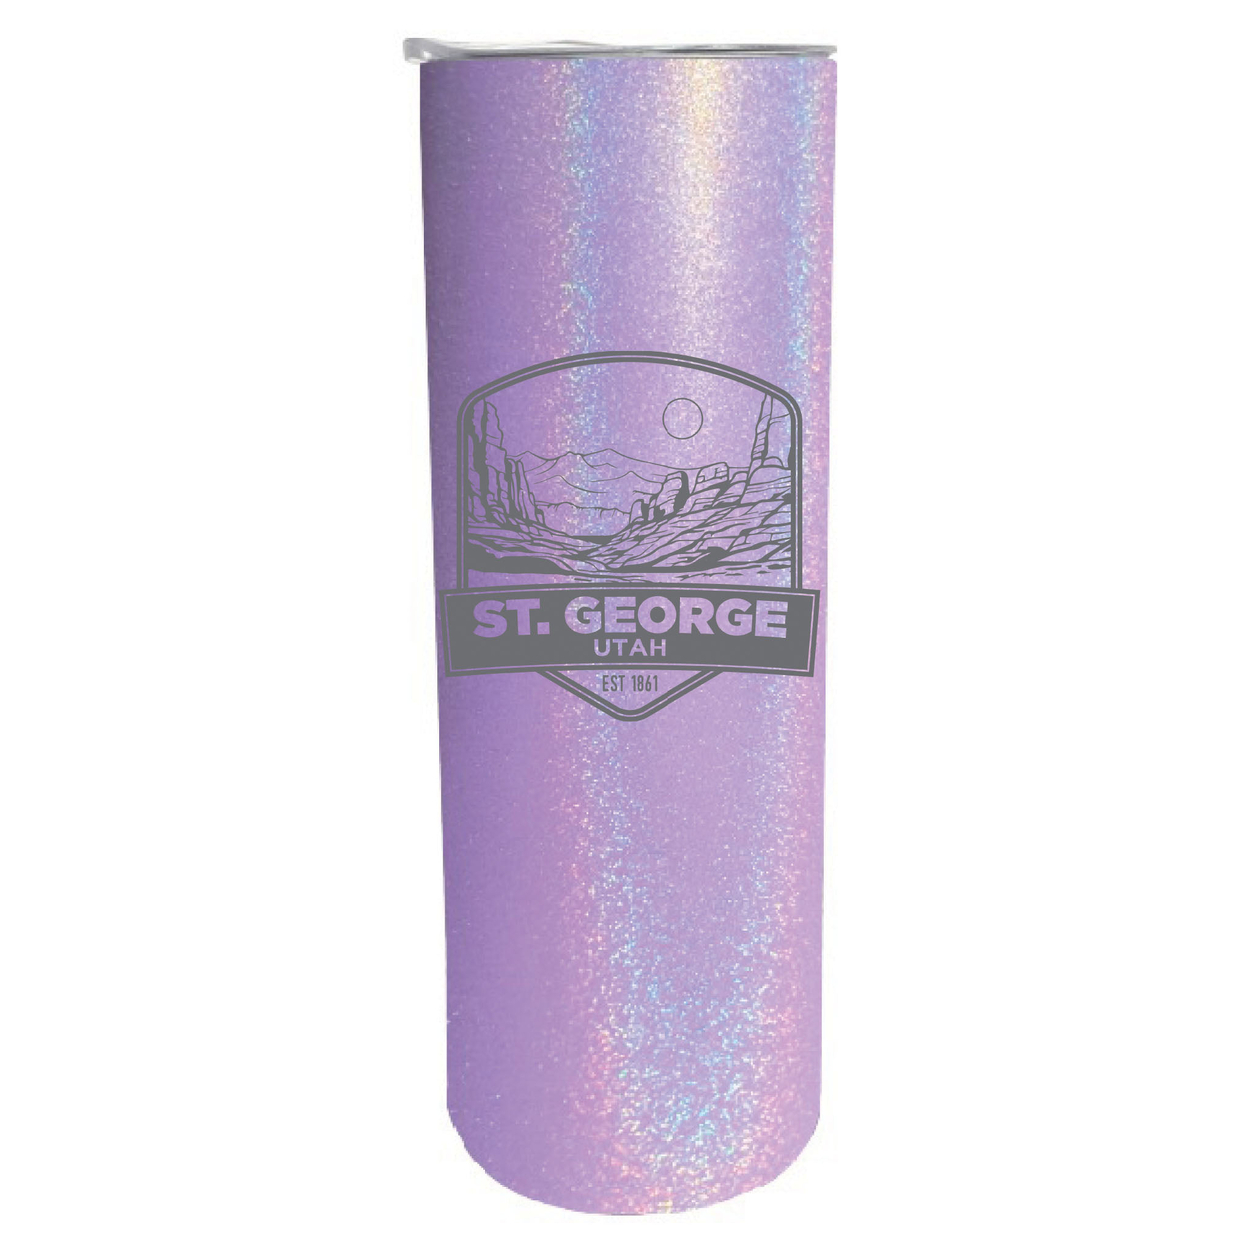 St. George Utah Souvenir 20 Oz Engraved Insulated Stainless Steel Skinny Tumbler - Black Glitter,,4-Pack